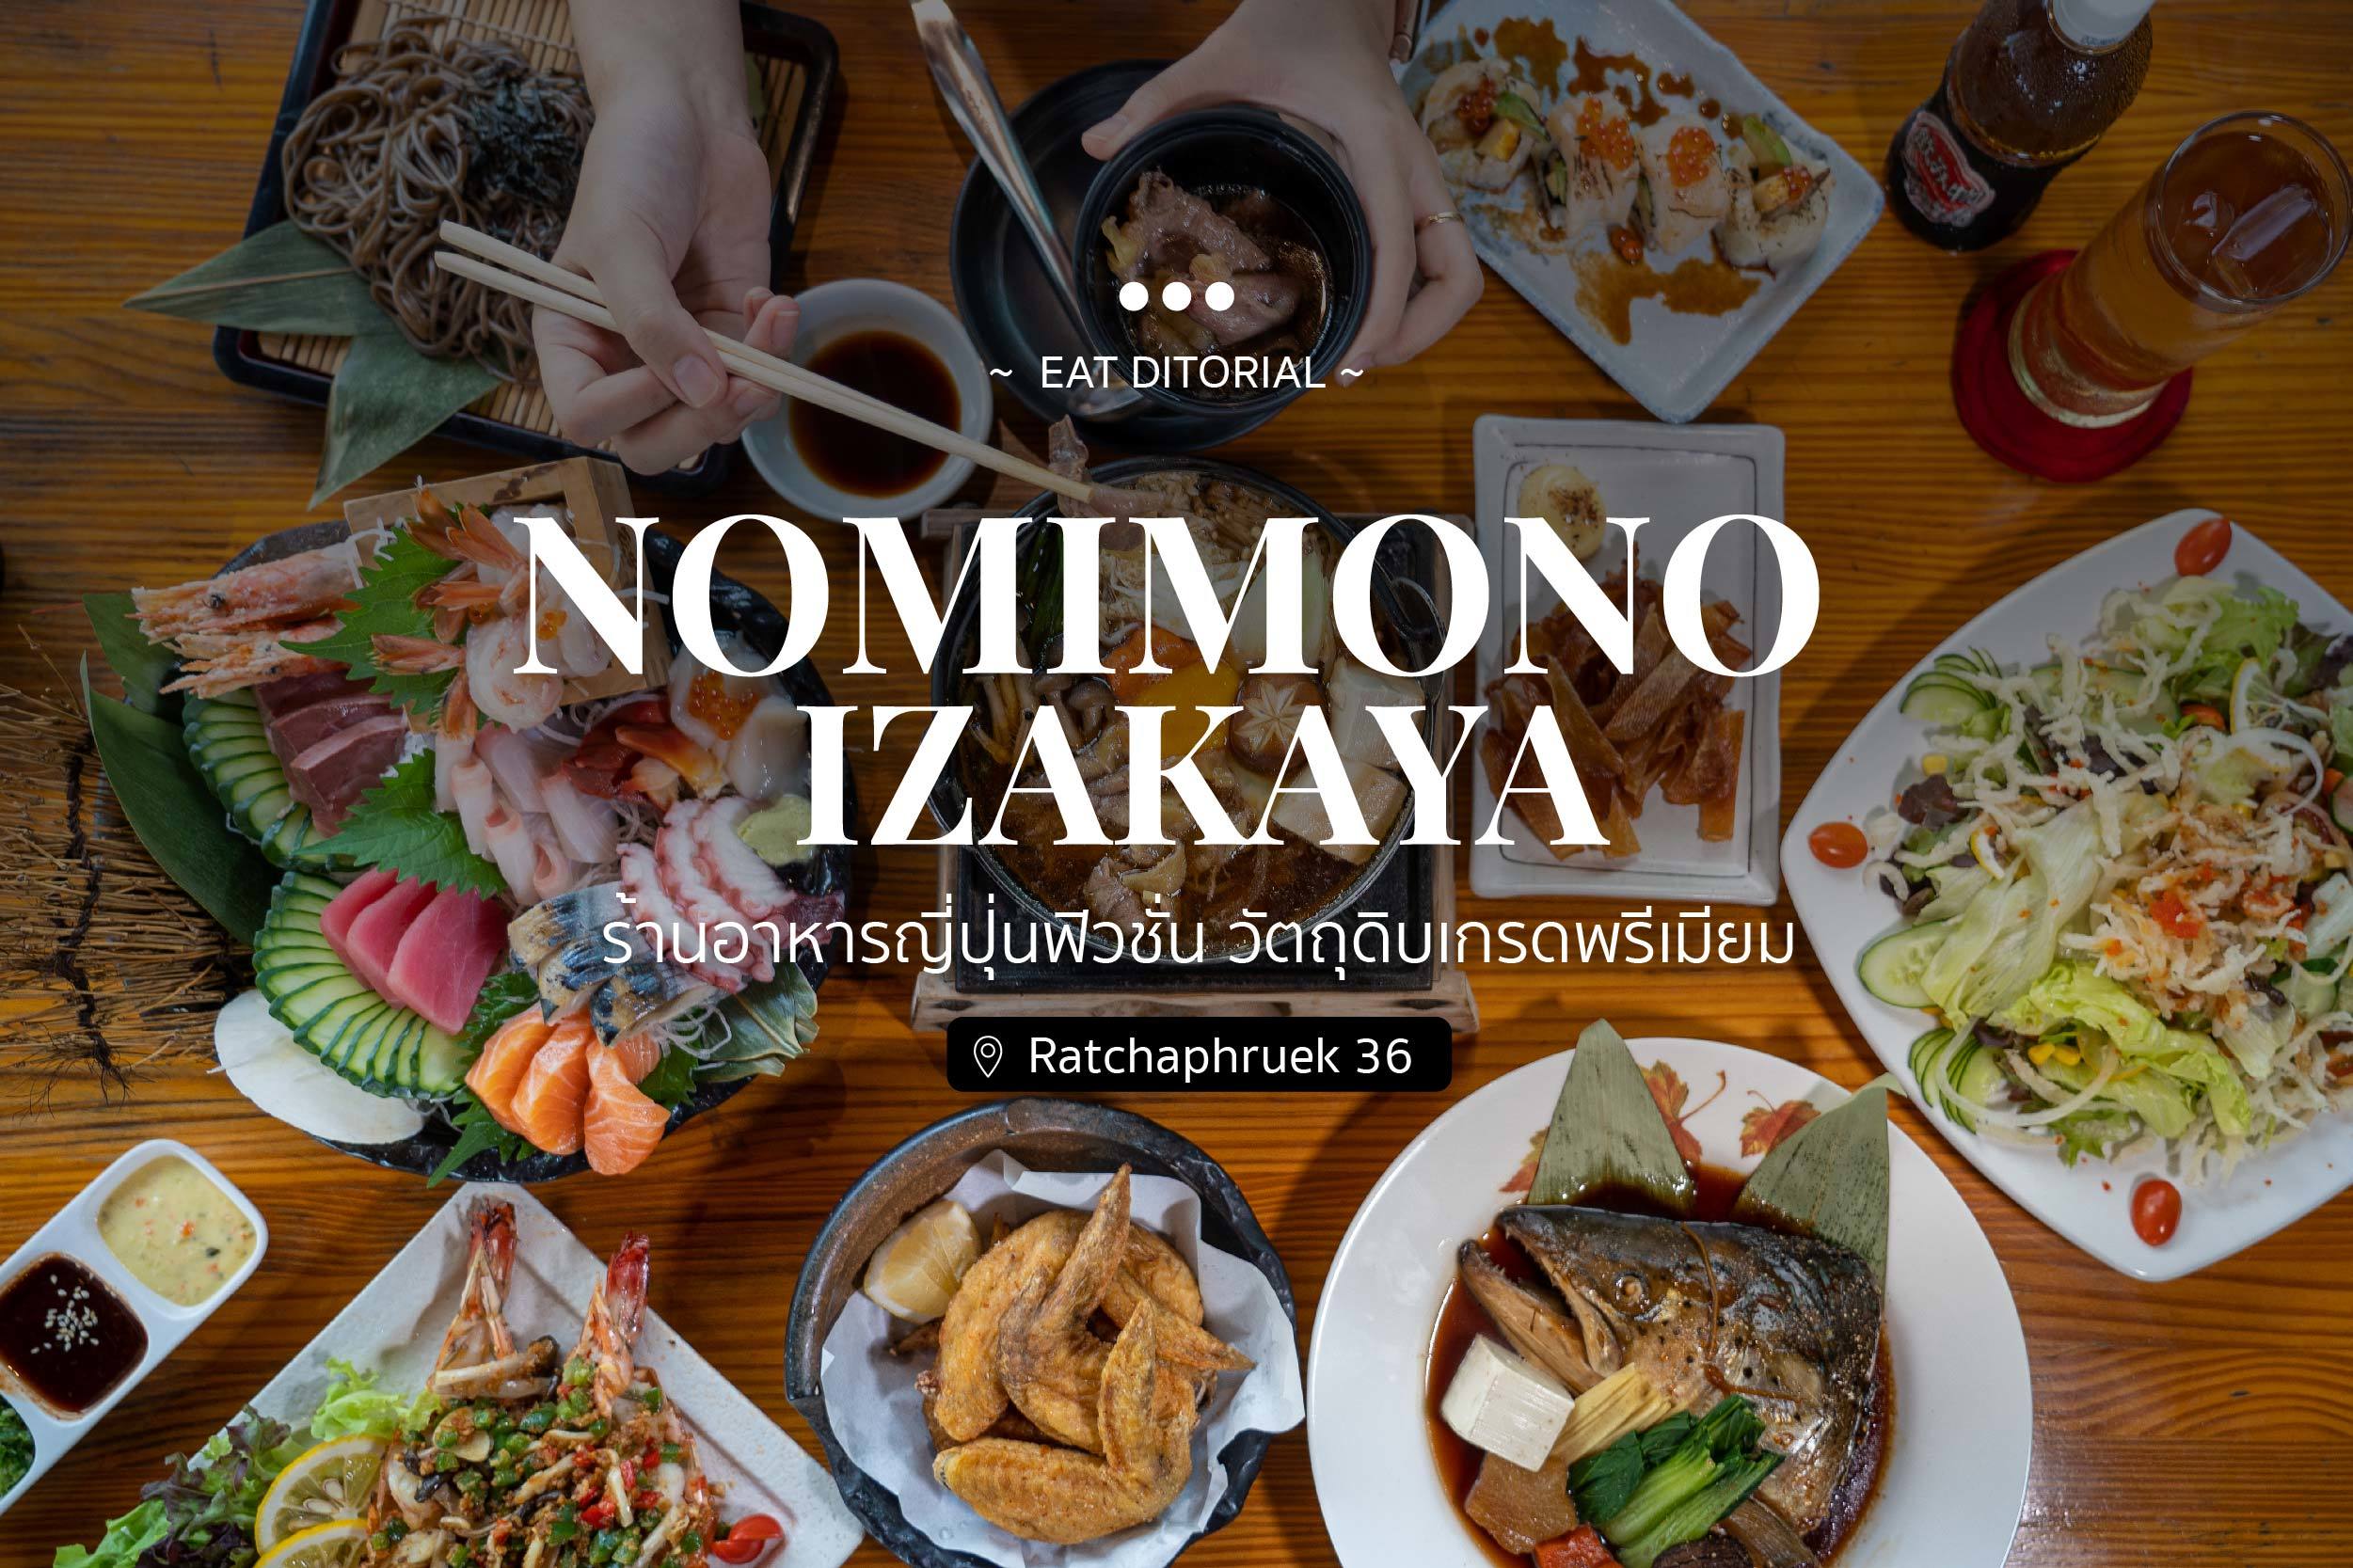 Nomimono Izakaya ร้านอาหารญี่ปุ่นฟิวชั่น วิตถุดิบเกรดพรีเมียม